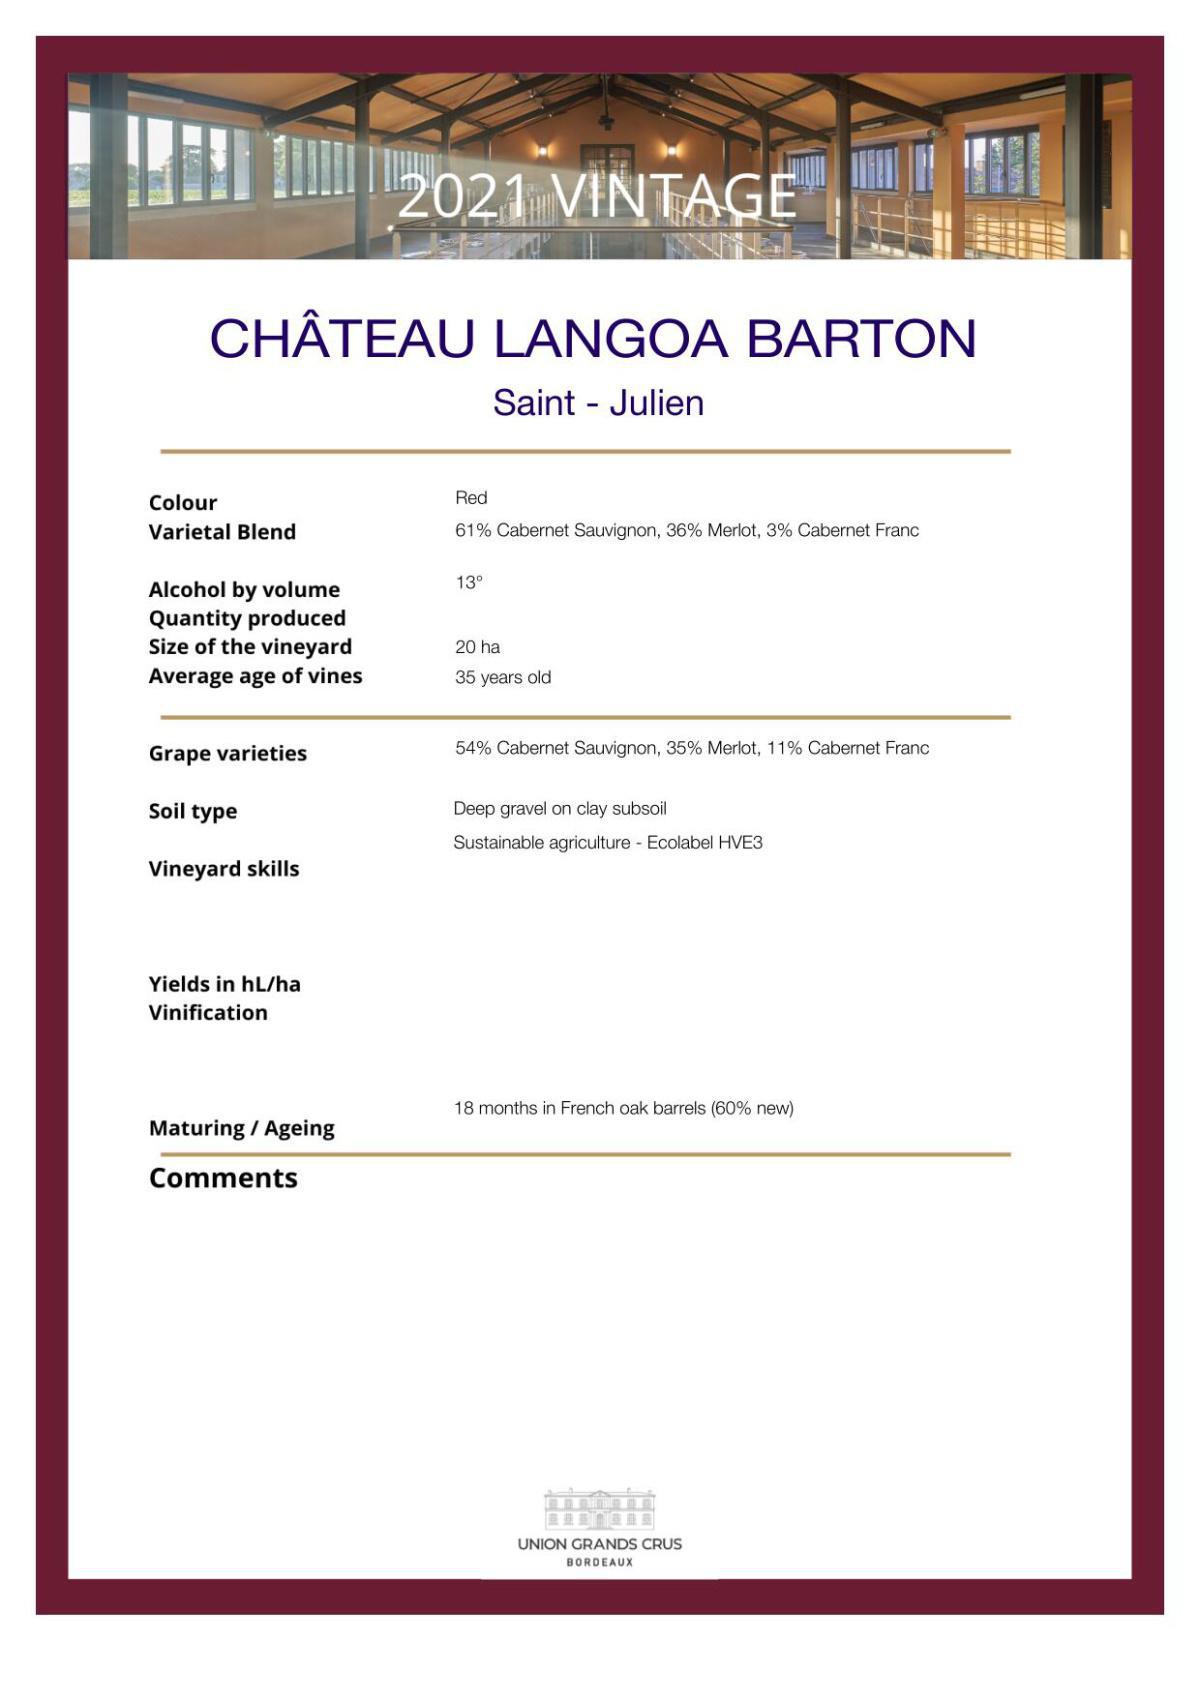 Château Langoa Barton